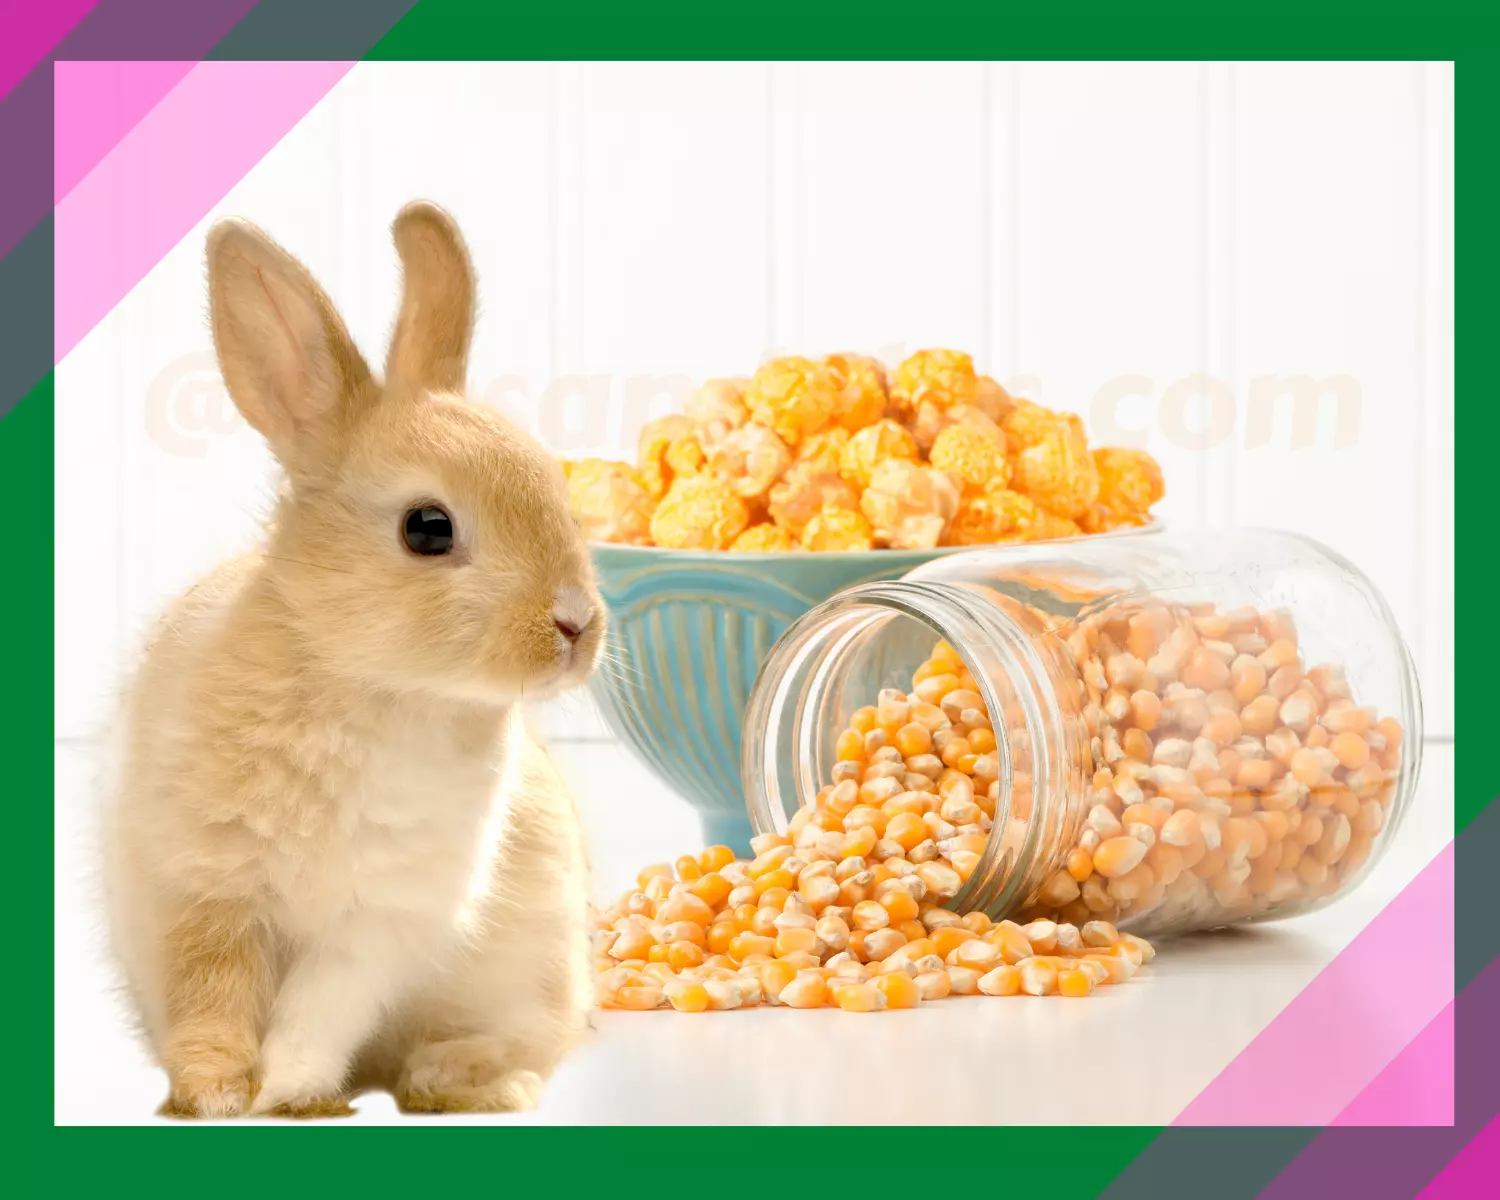 Rabbit and popcorn kernel